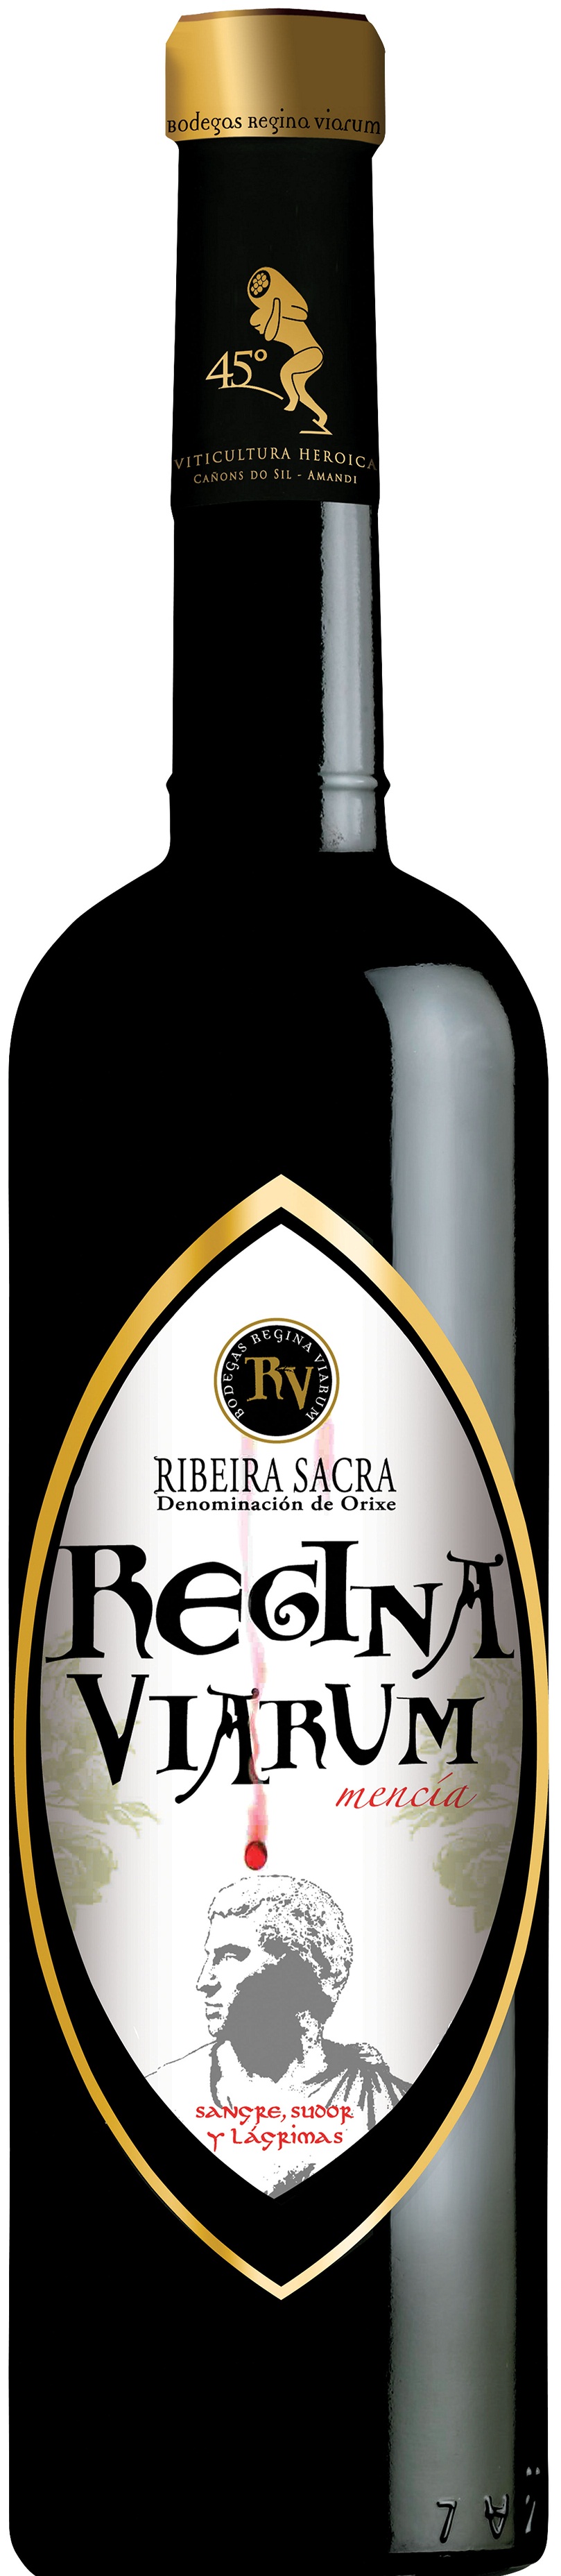 Logo Wine Regina Viarum